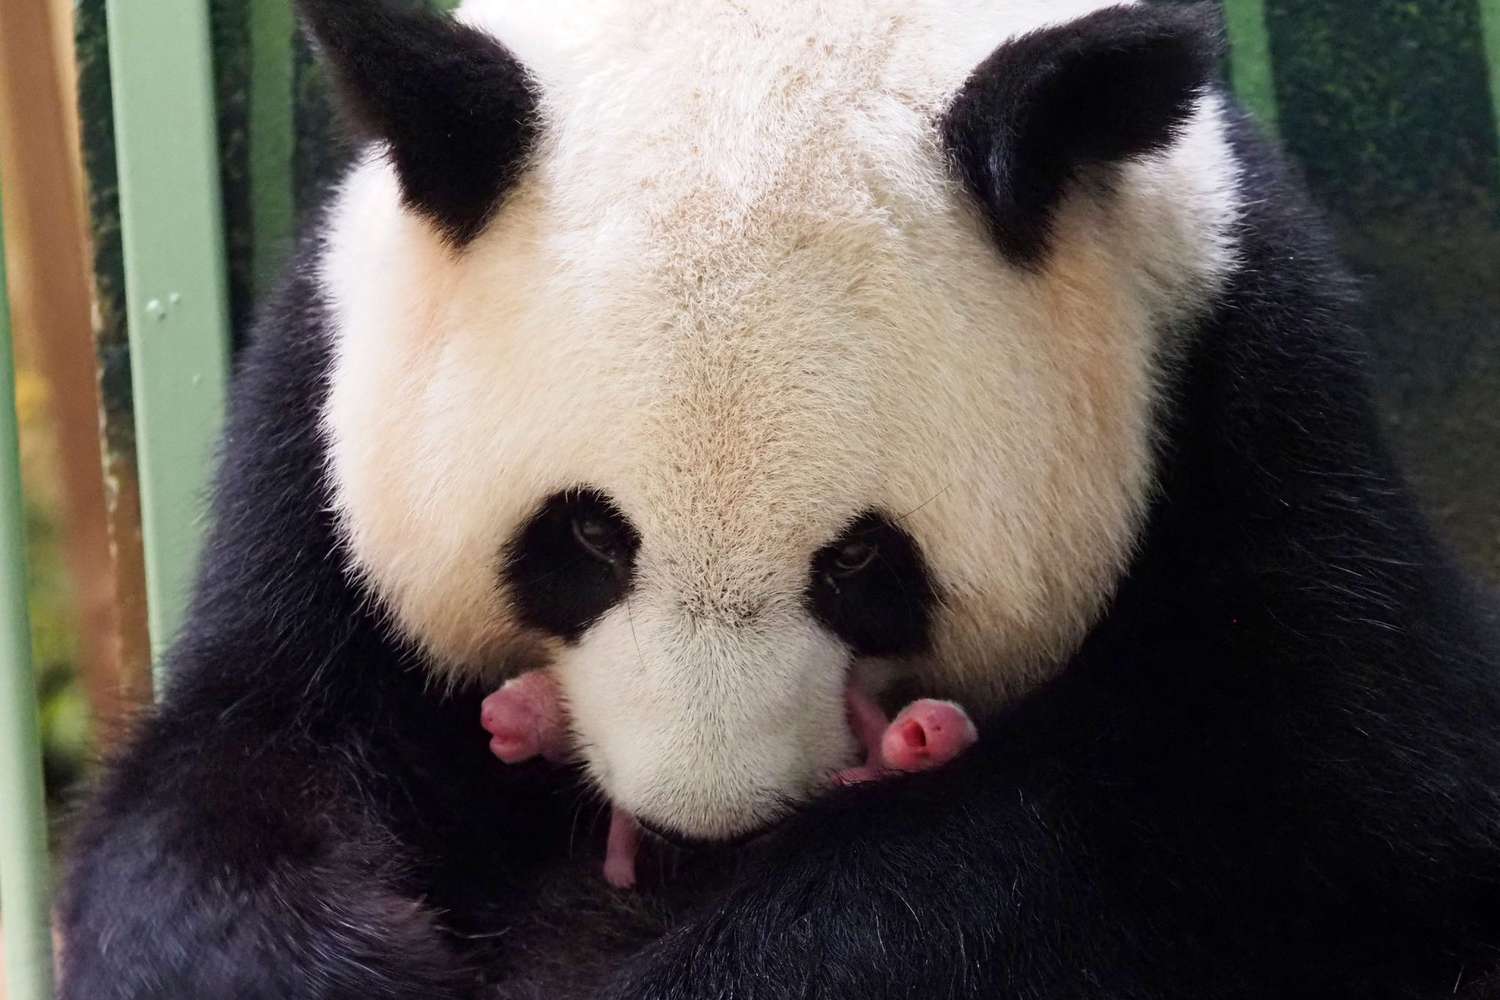 Panda gives birth to twins